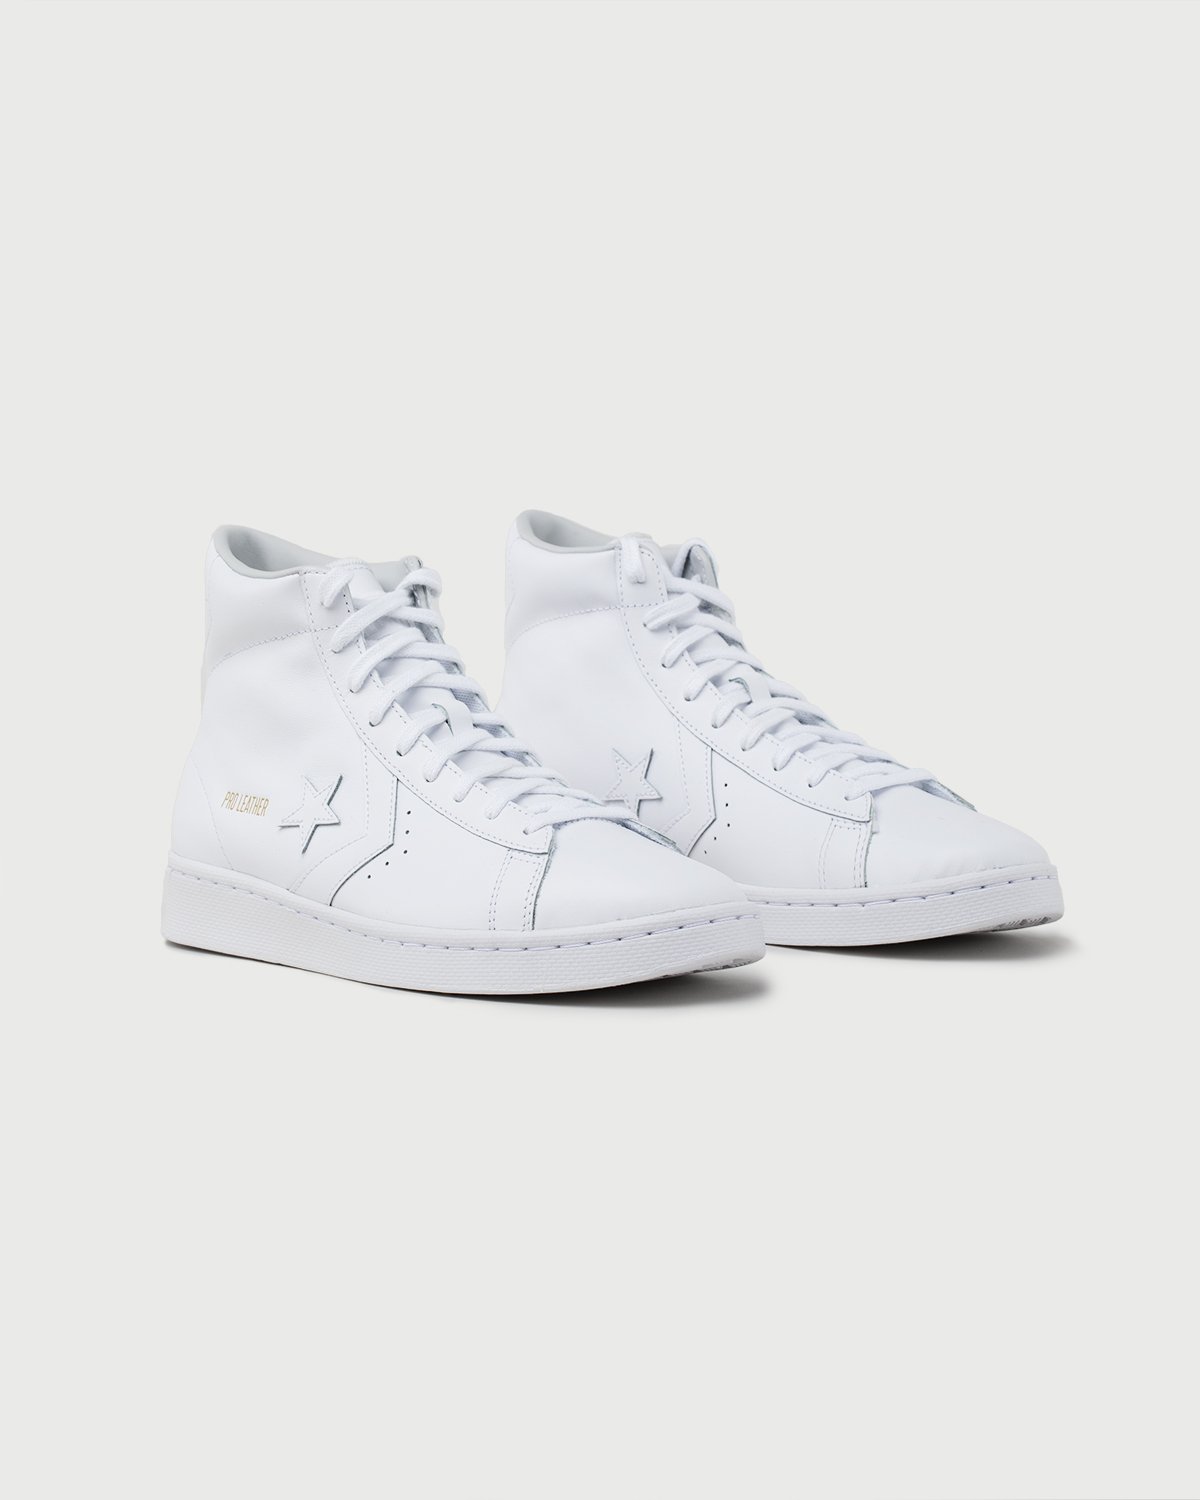 Converse - Pro Leather Hi White - Footwear - White - Image 2